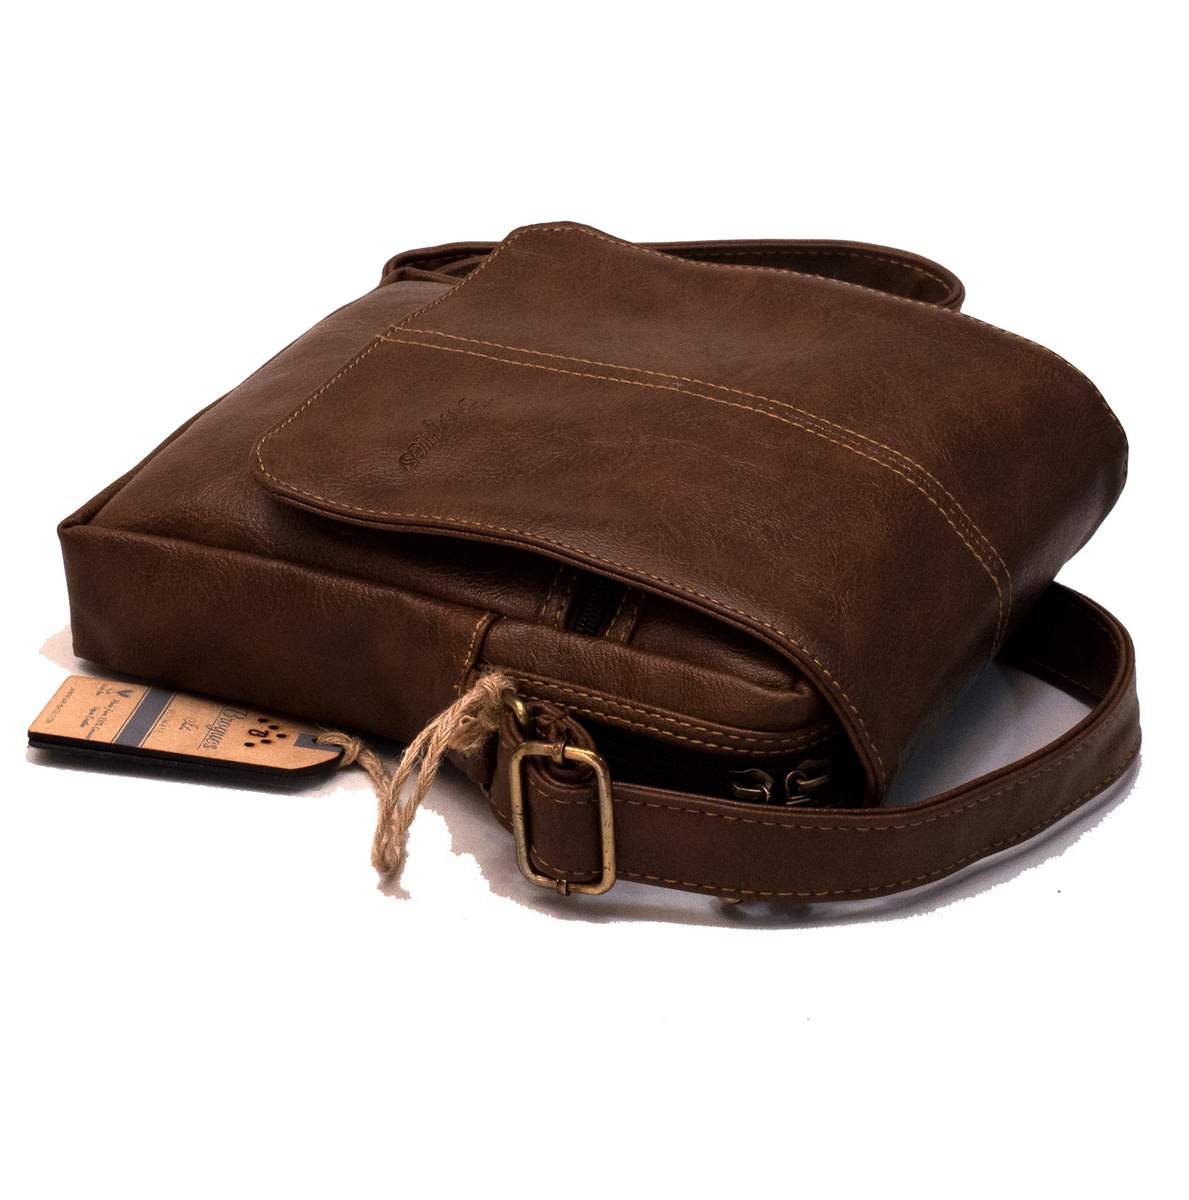 Cityslide messenger leather satchel Hermès Burgundy in Leather